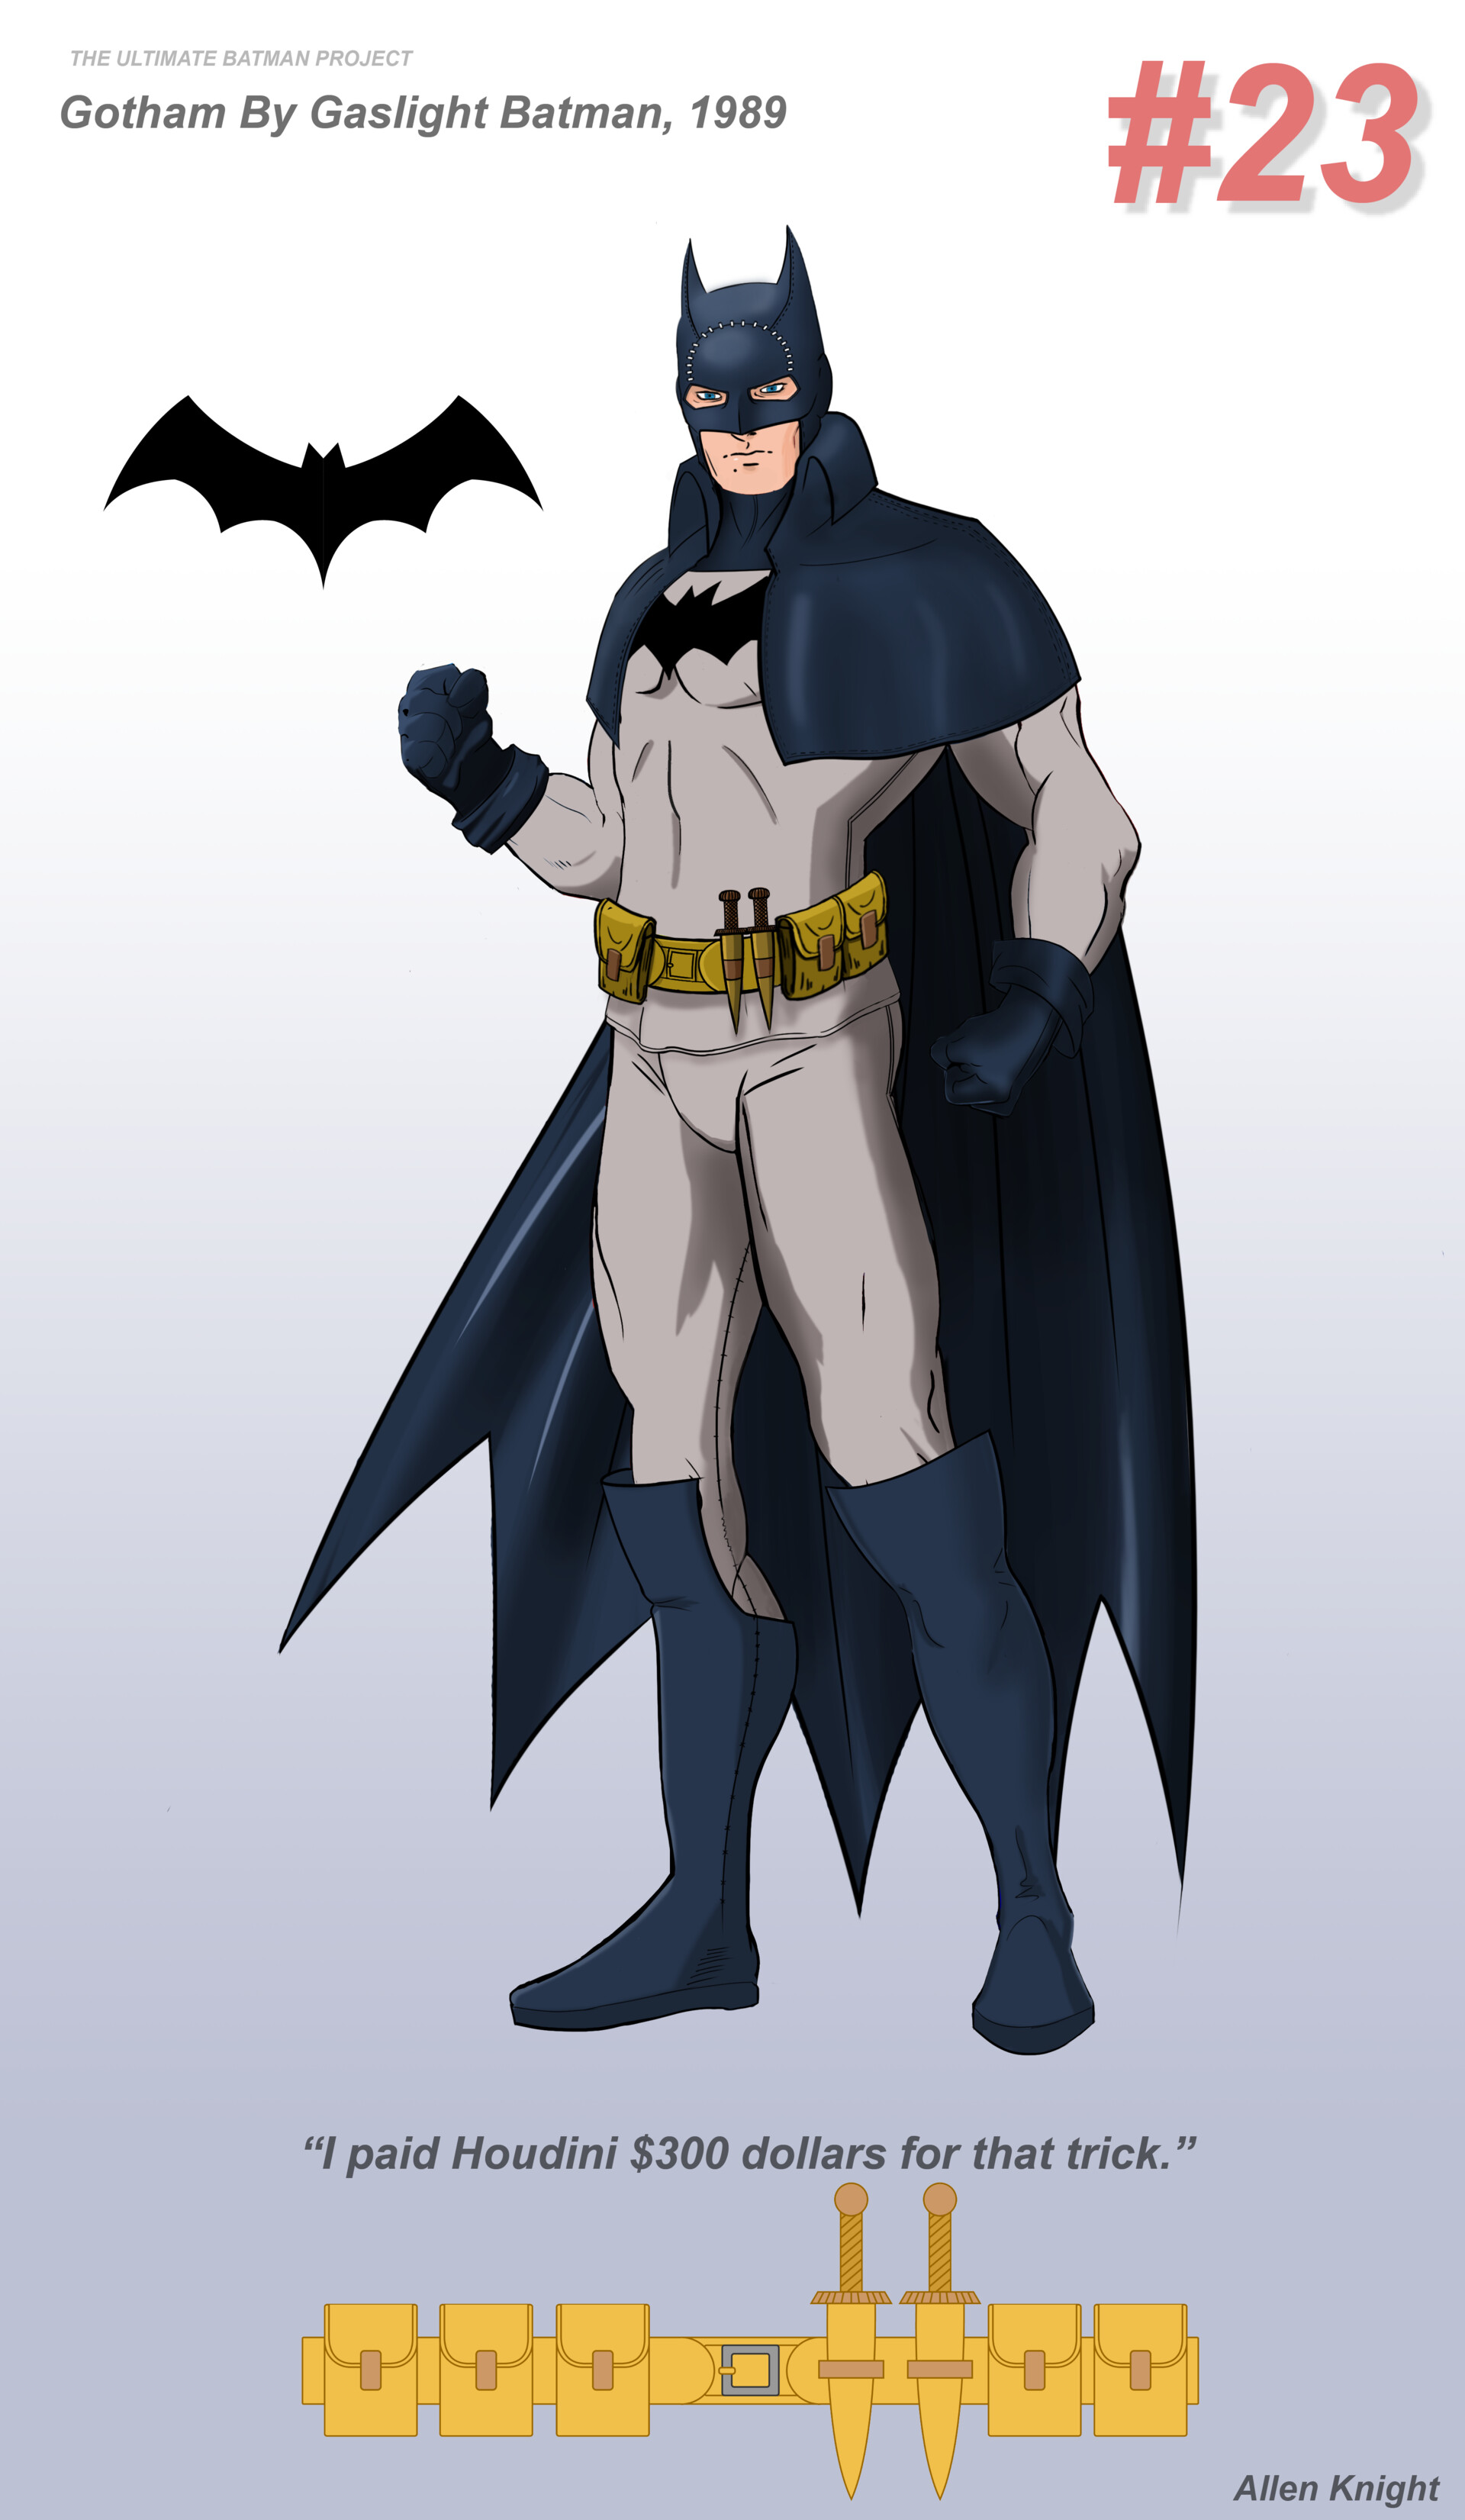 ArtStation - The ultimate batman project costume #23 - Gotham By Gaslight  Batman